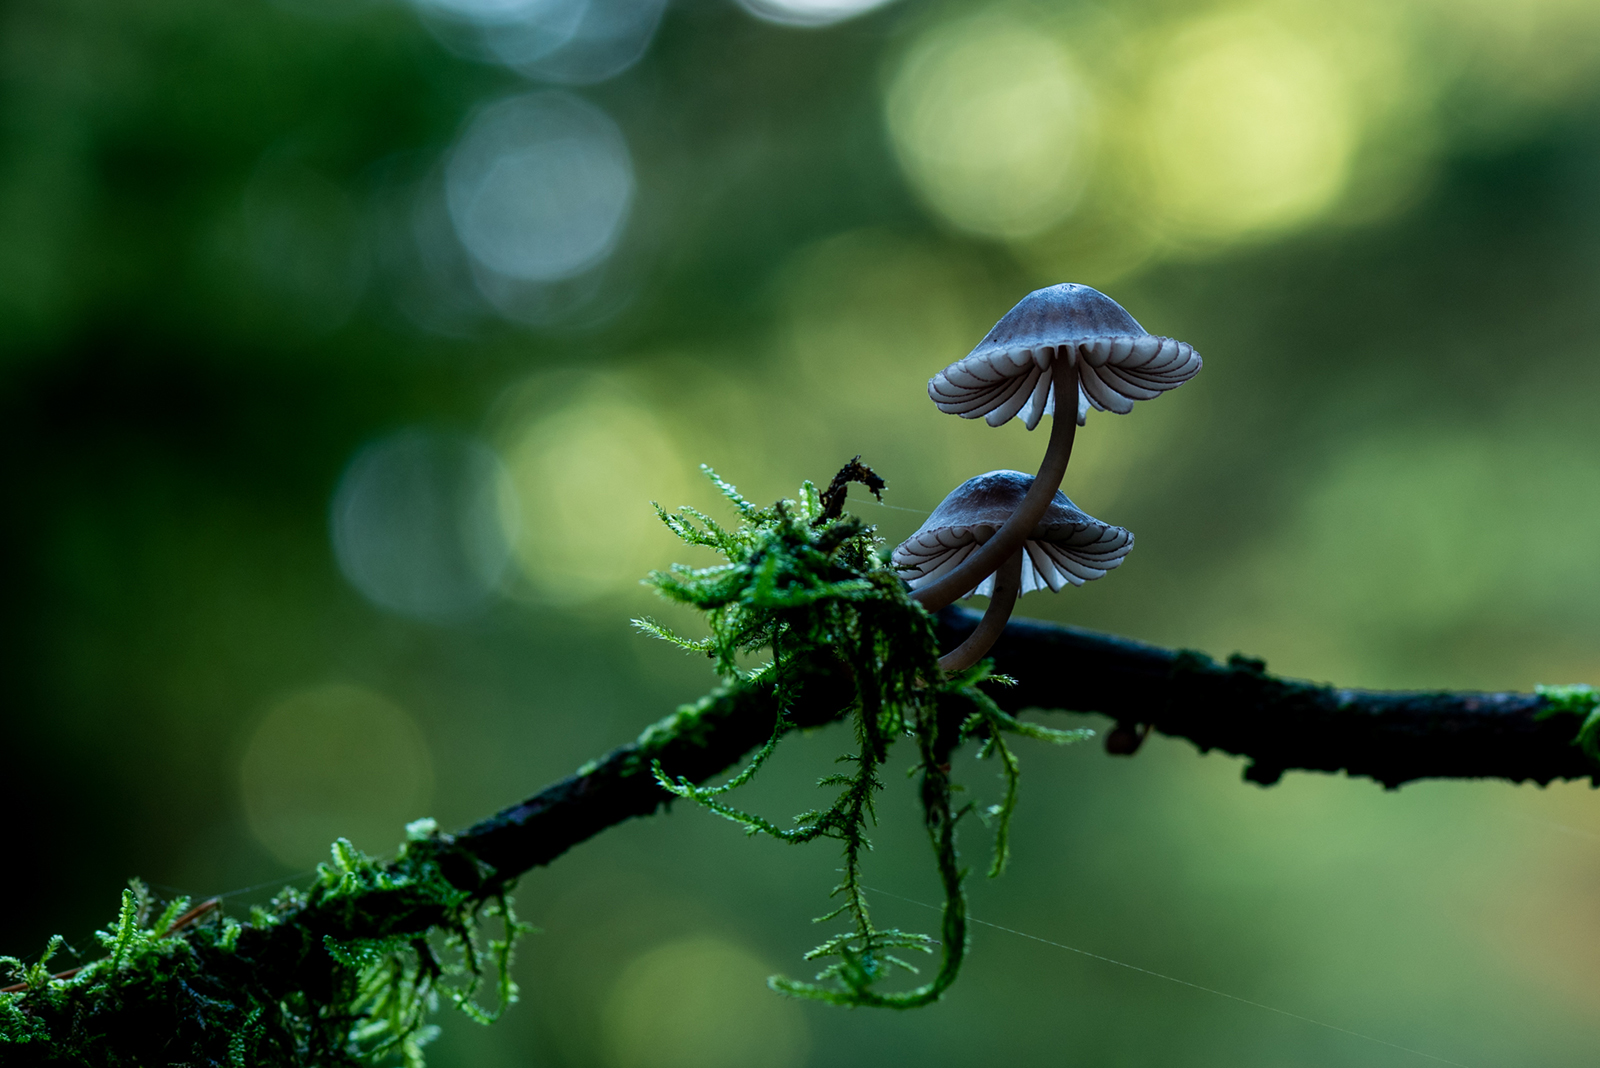 Mushrooms on tree branch (Jes Peder Løkke)